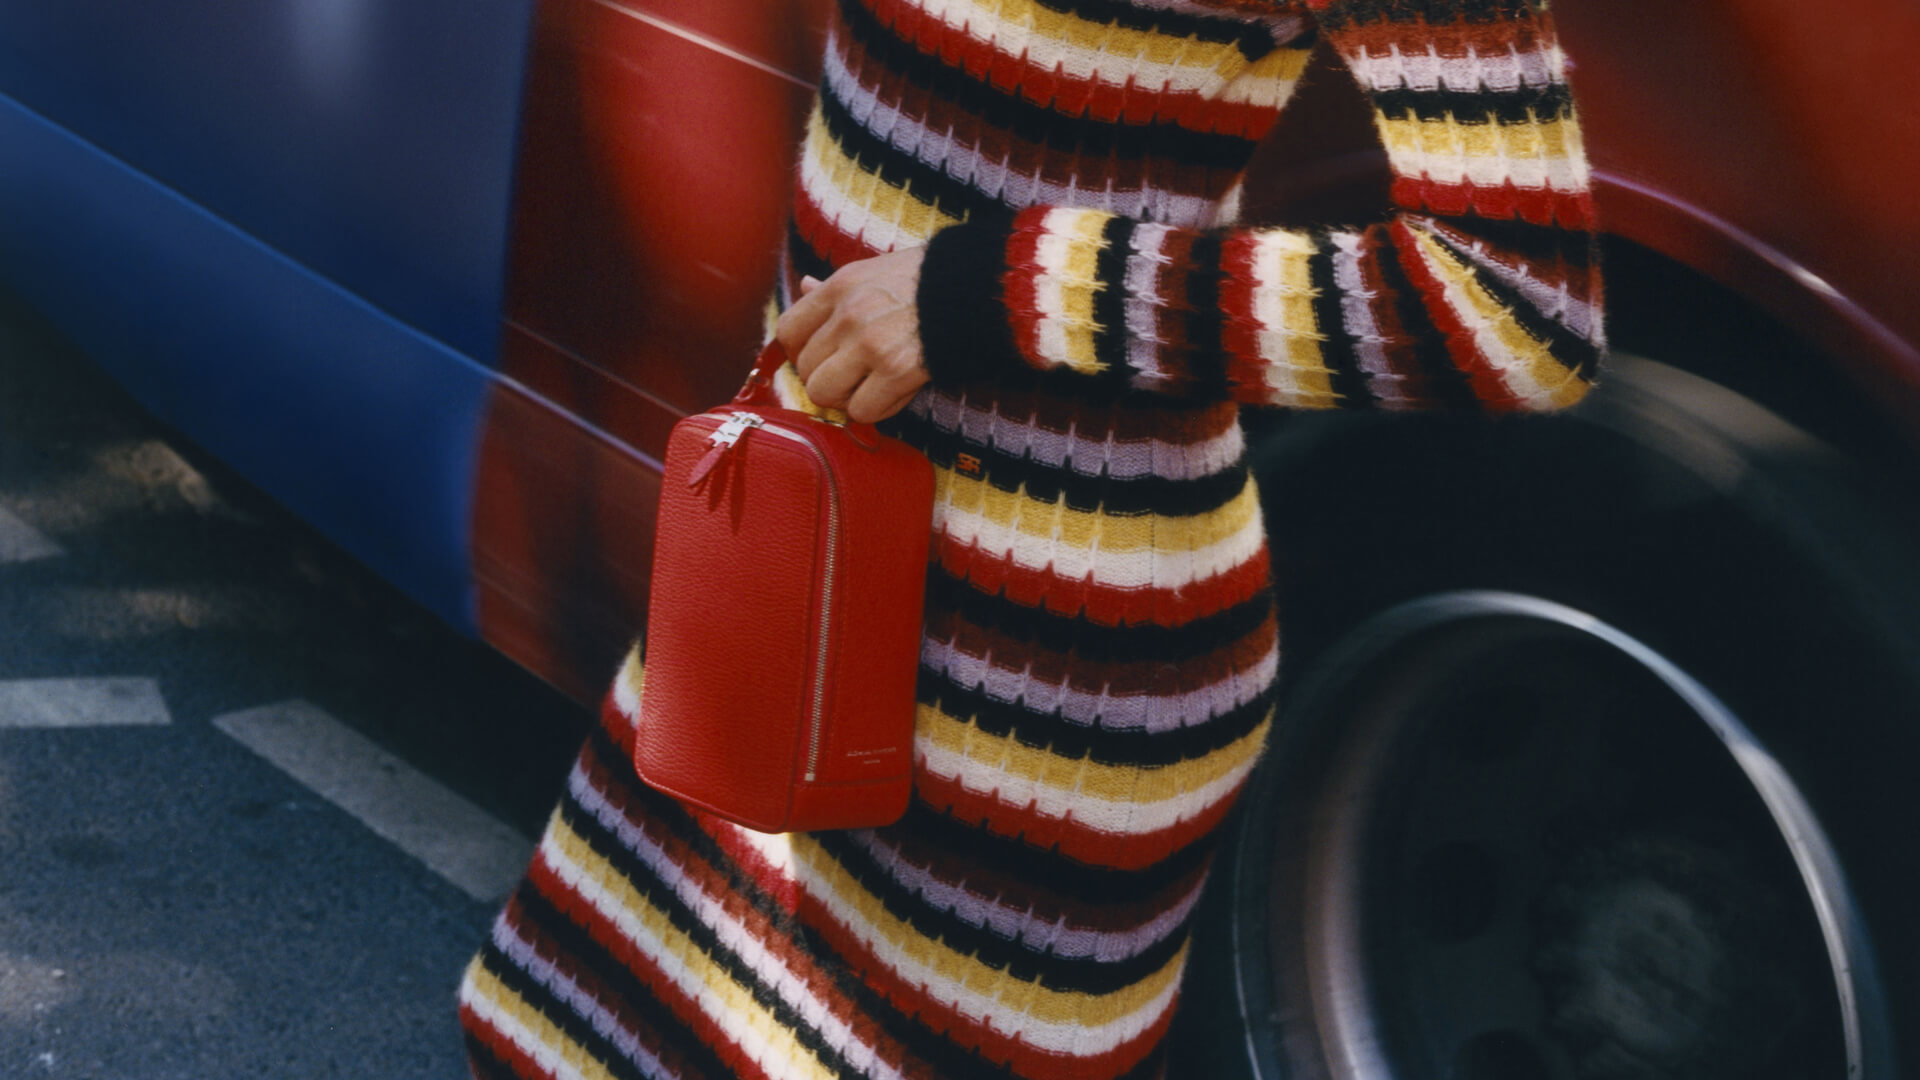 Red leather handbag for women